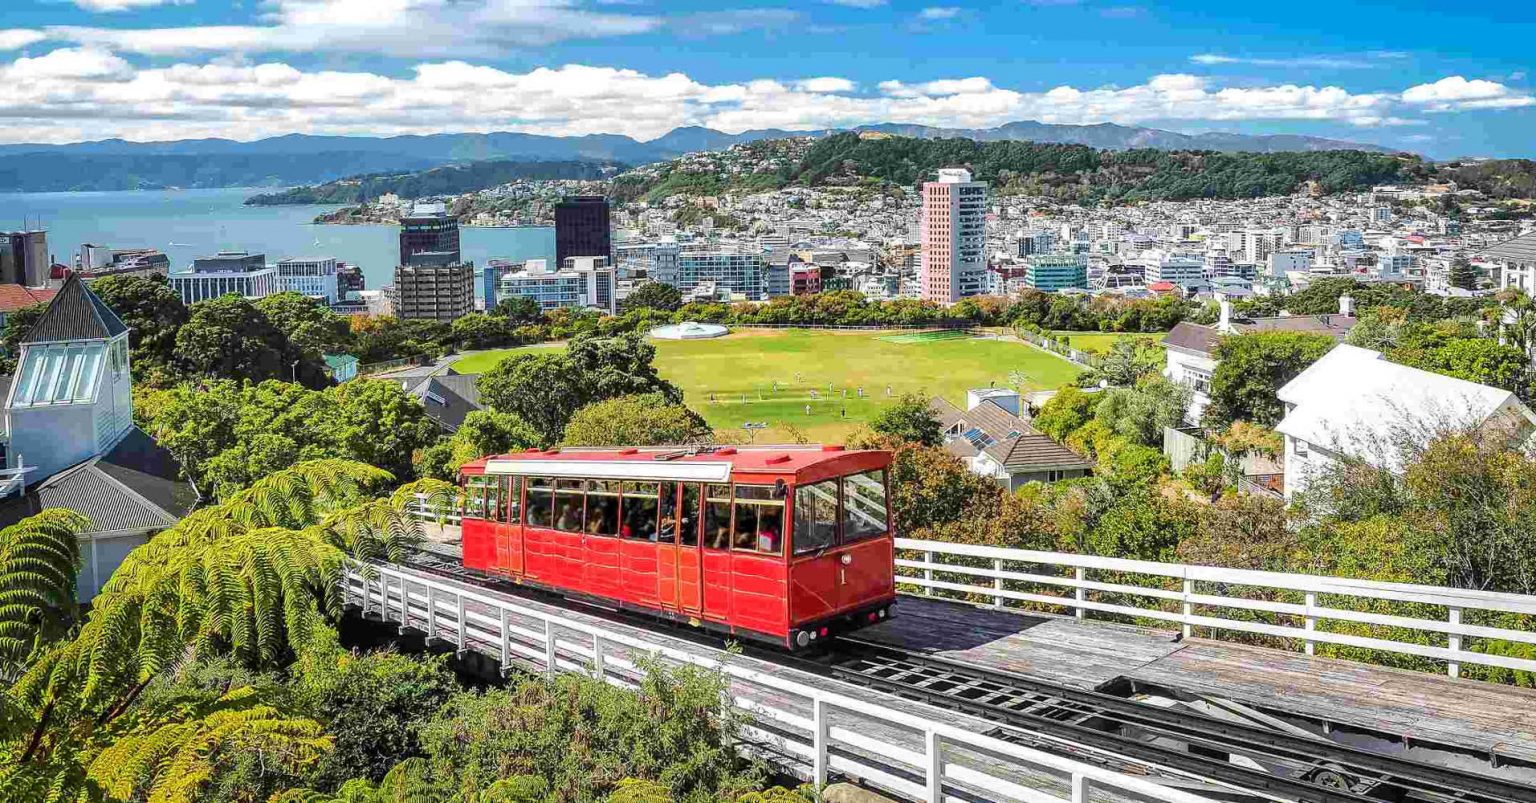 Wellington Cable Car, The most famous landmark in Wellington, New Zealand